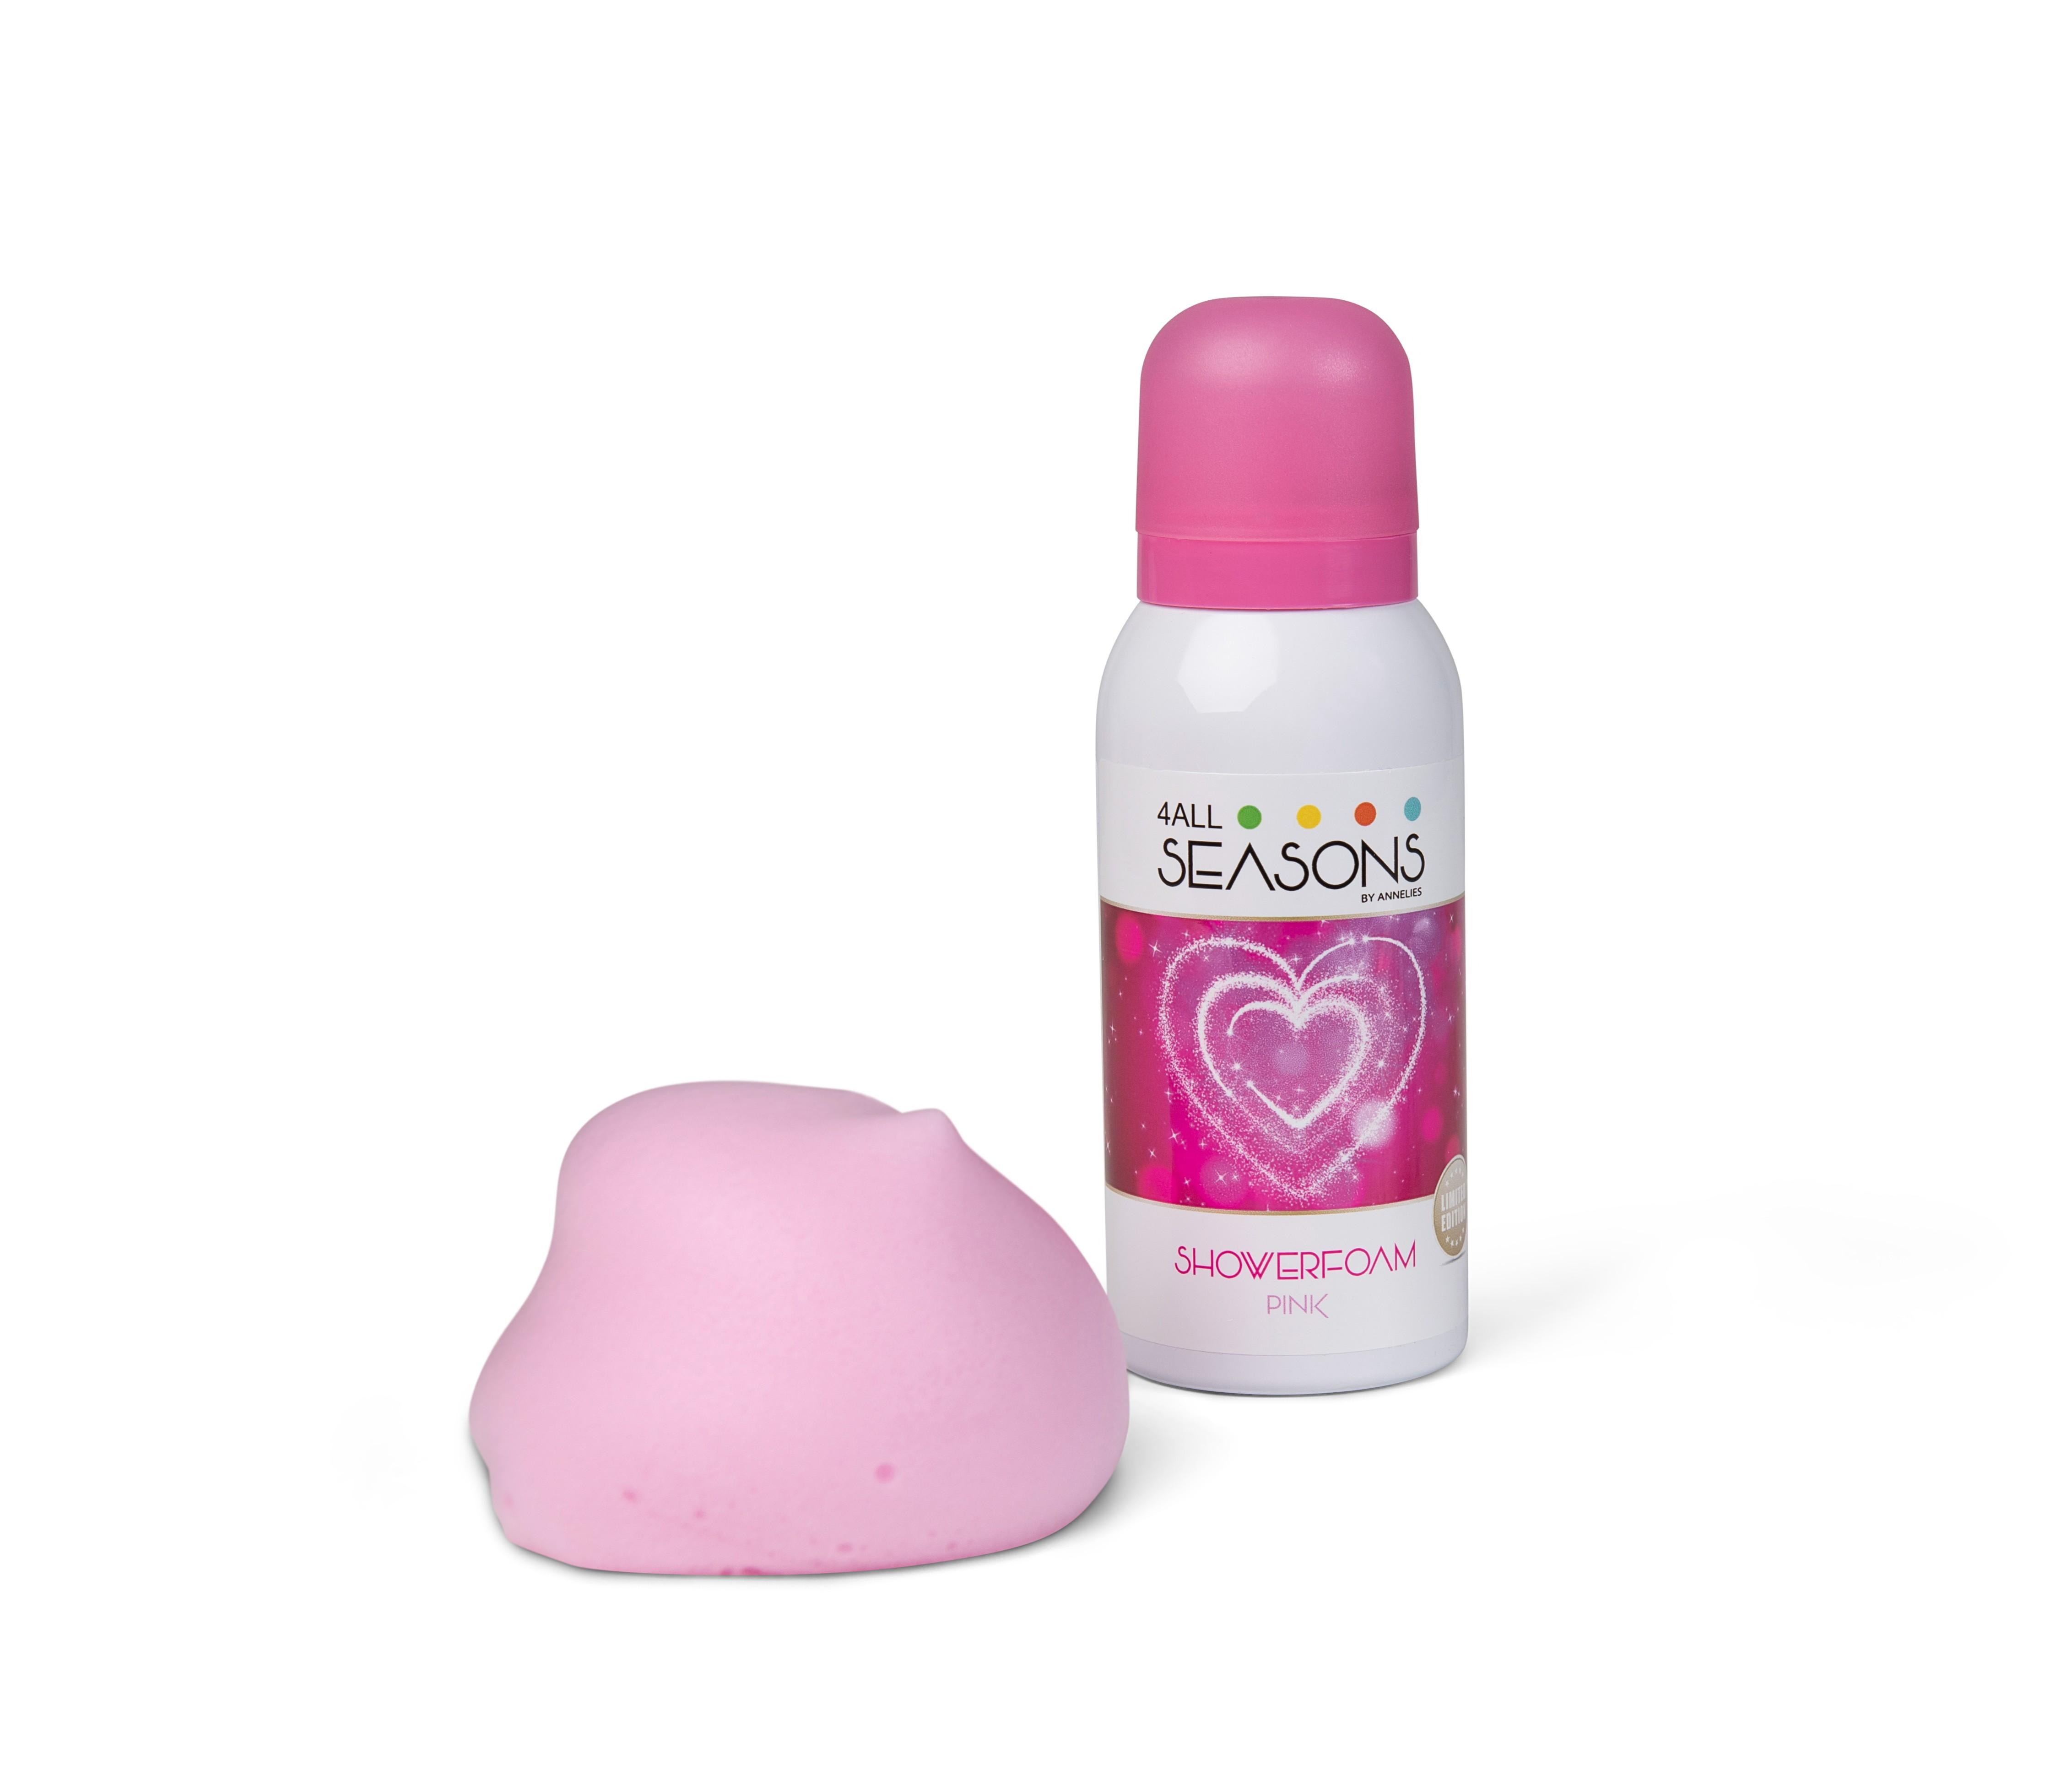 4All Seasons - Shower Foam Pink limited edition 100ml